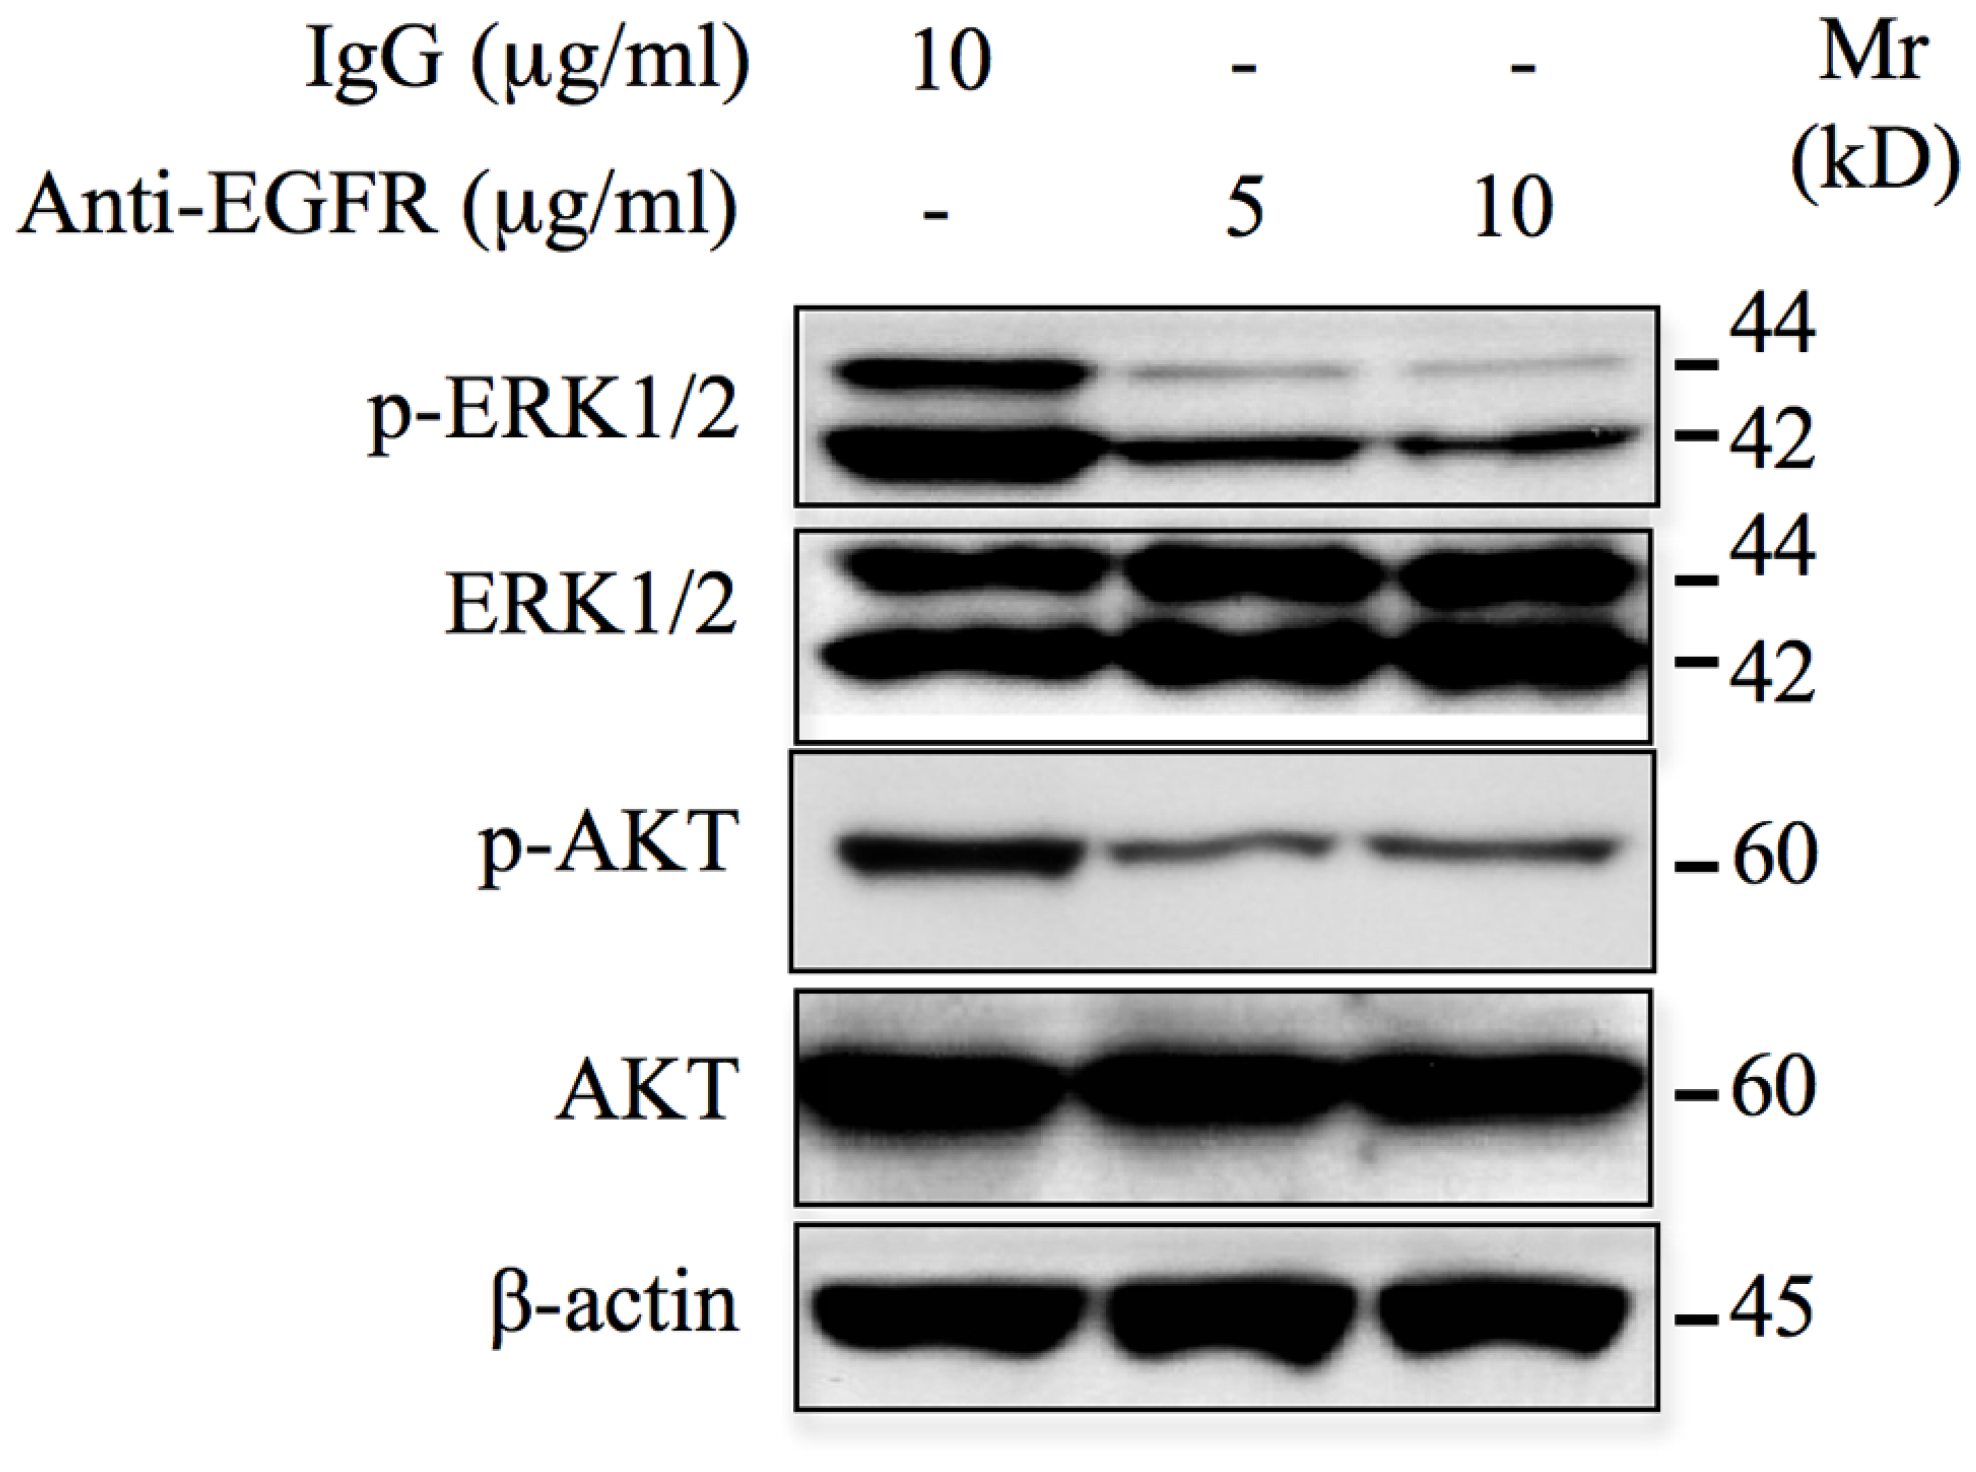 Monoclonal anti-EGFR neutralizing antibodies inhibit ERK1/2 and AKT signaling pathways.